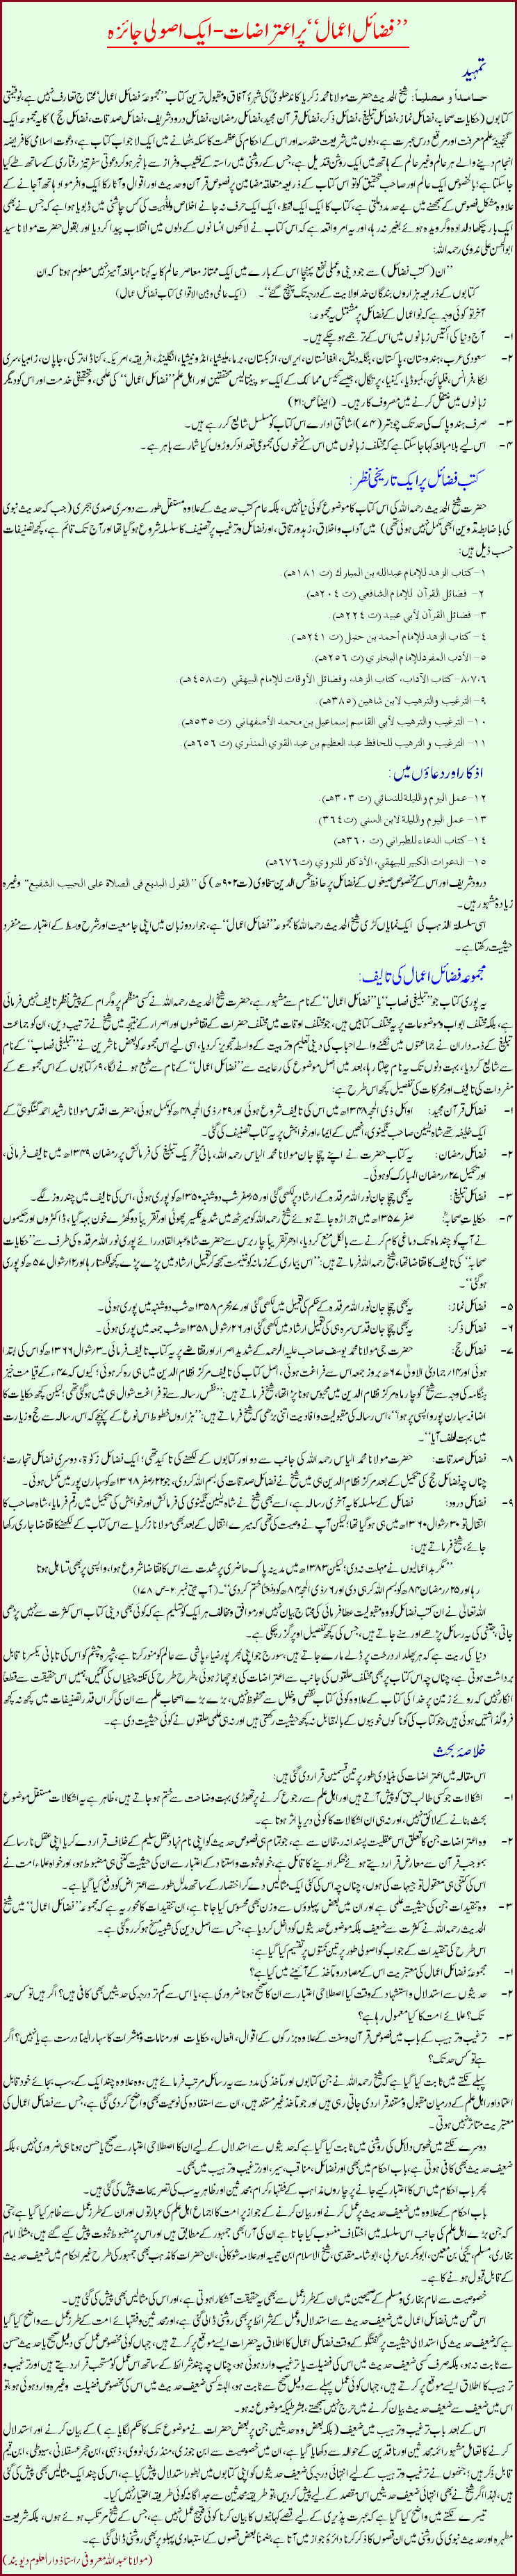 Reply of Criticism on Fazail-e-Ammal par iterazat ka tafseele jayza